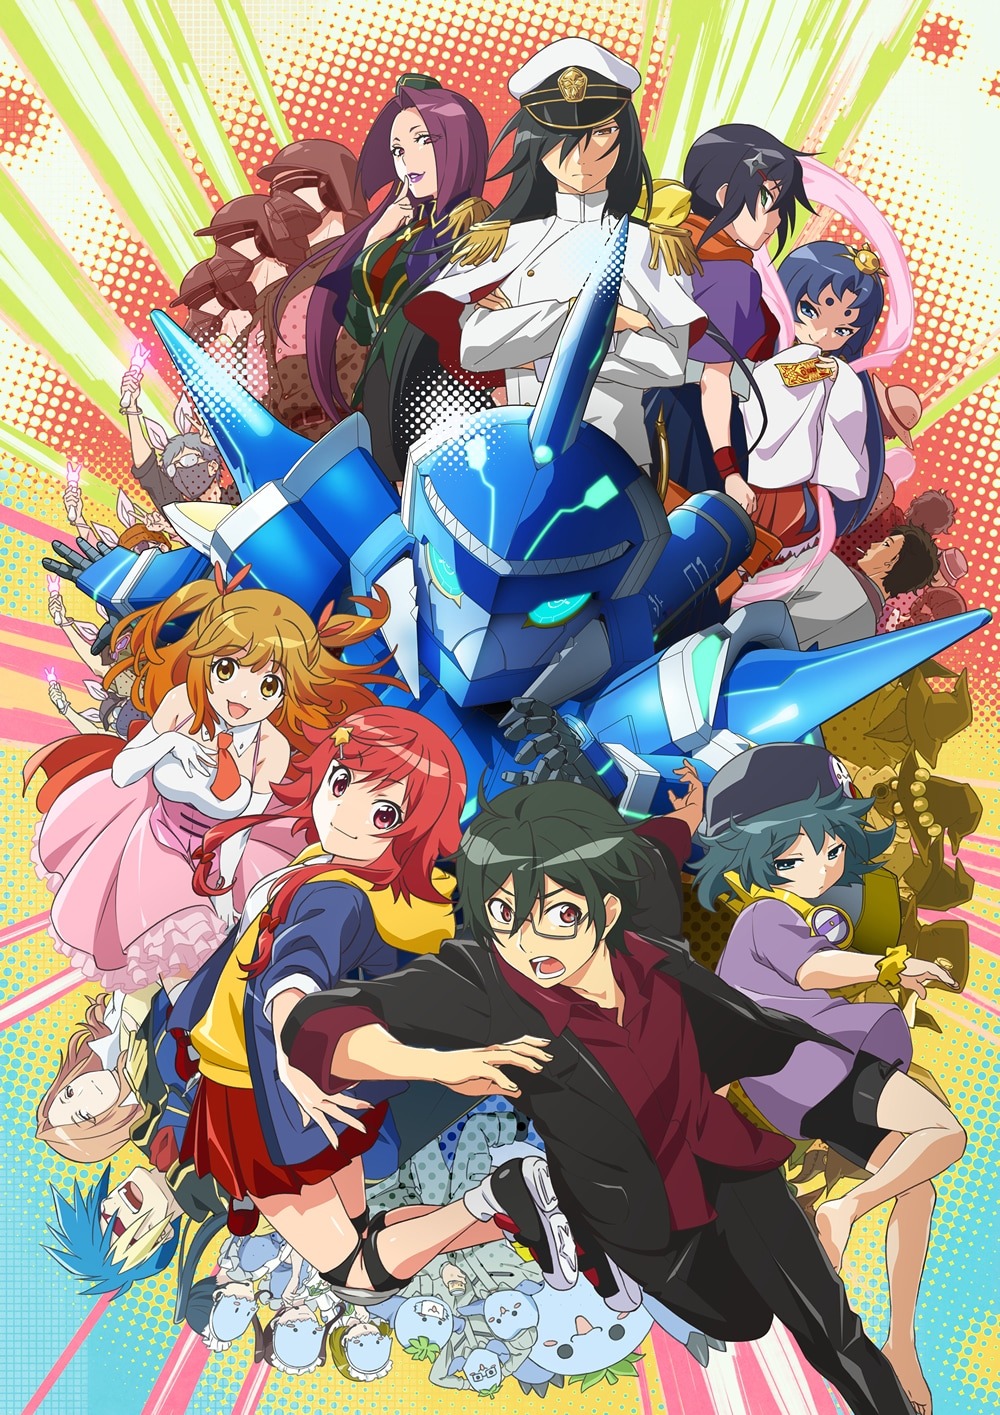 Sekai Yume Otaku NEO: Estúdio de animes Kyoto Animation anuncia